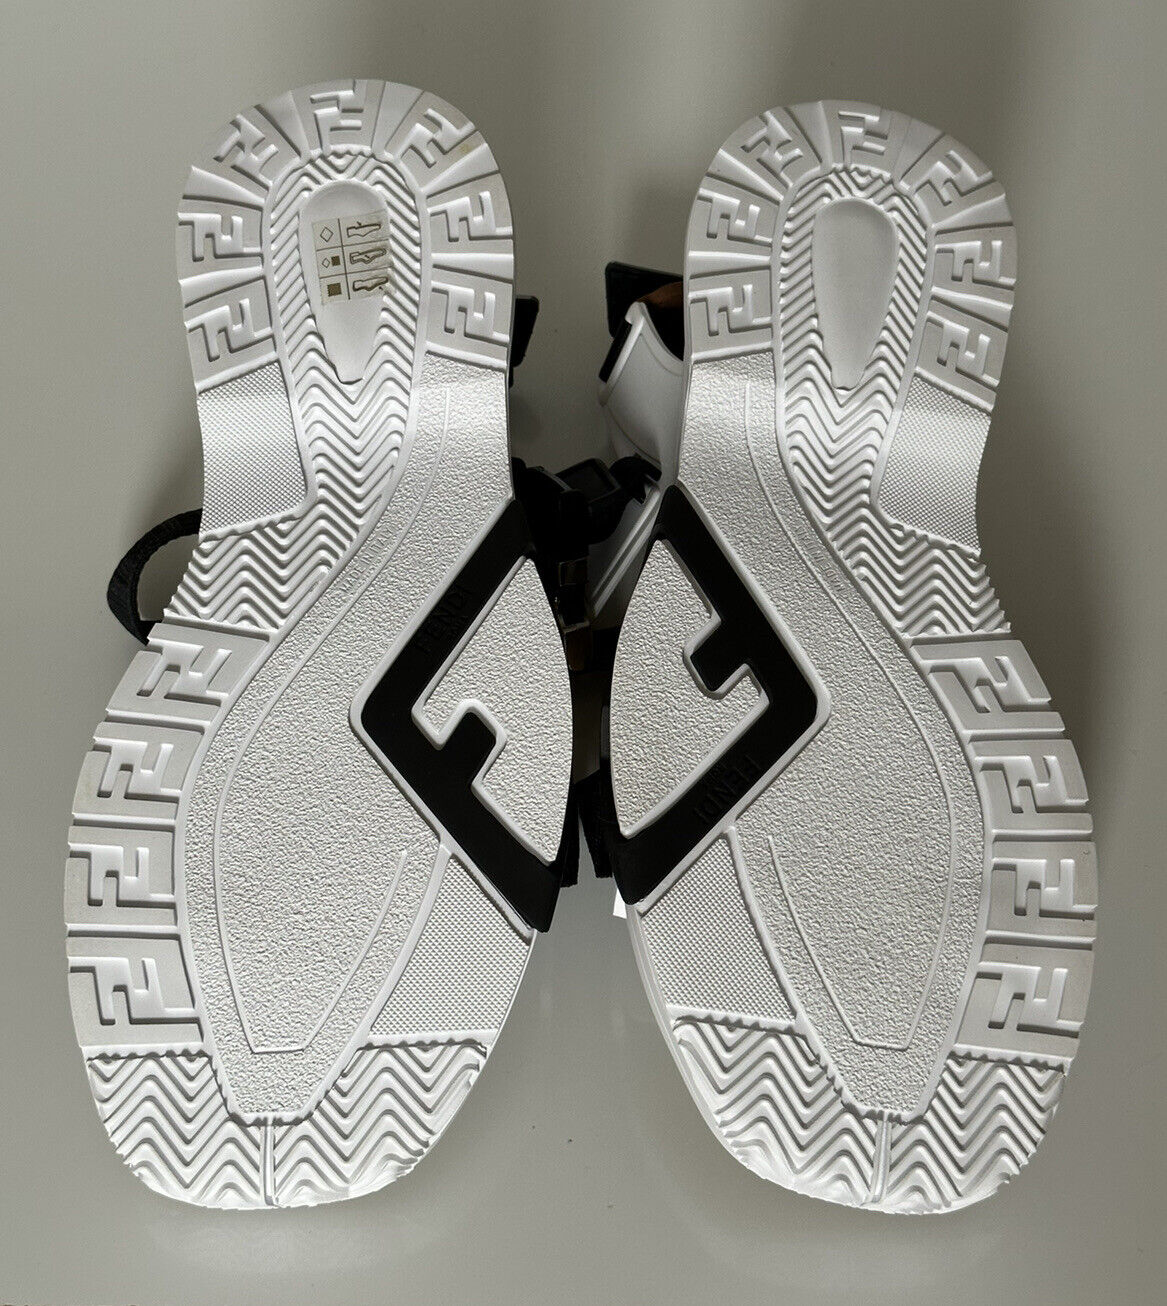 NIB $895 Fendi Men's FF Strapped Sandals 11 US/ 10 UK Italy 7X1503